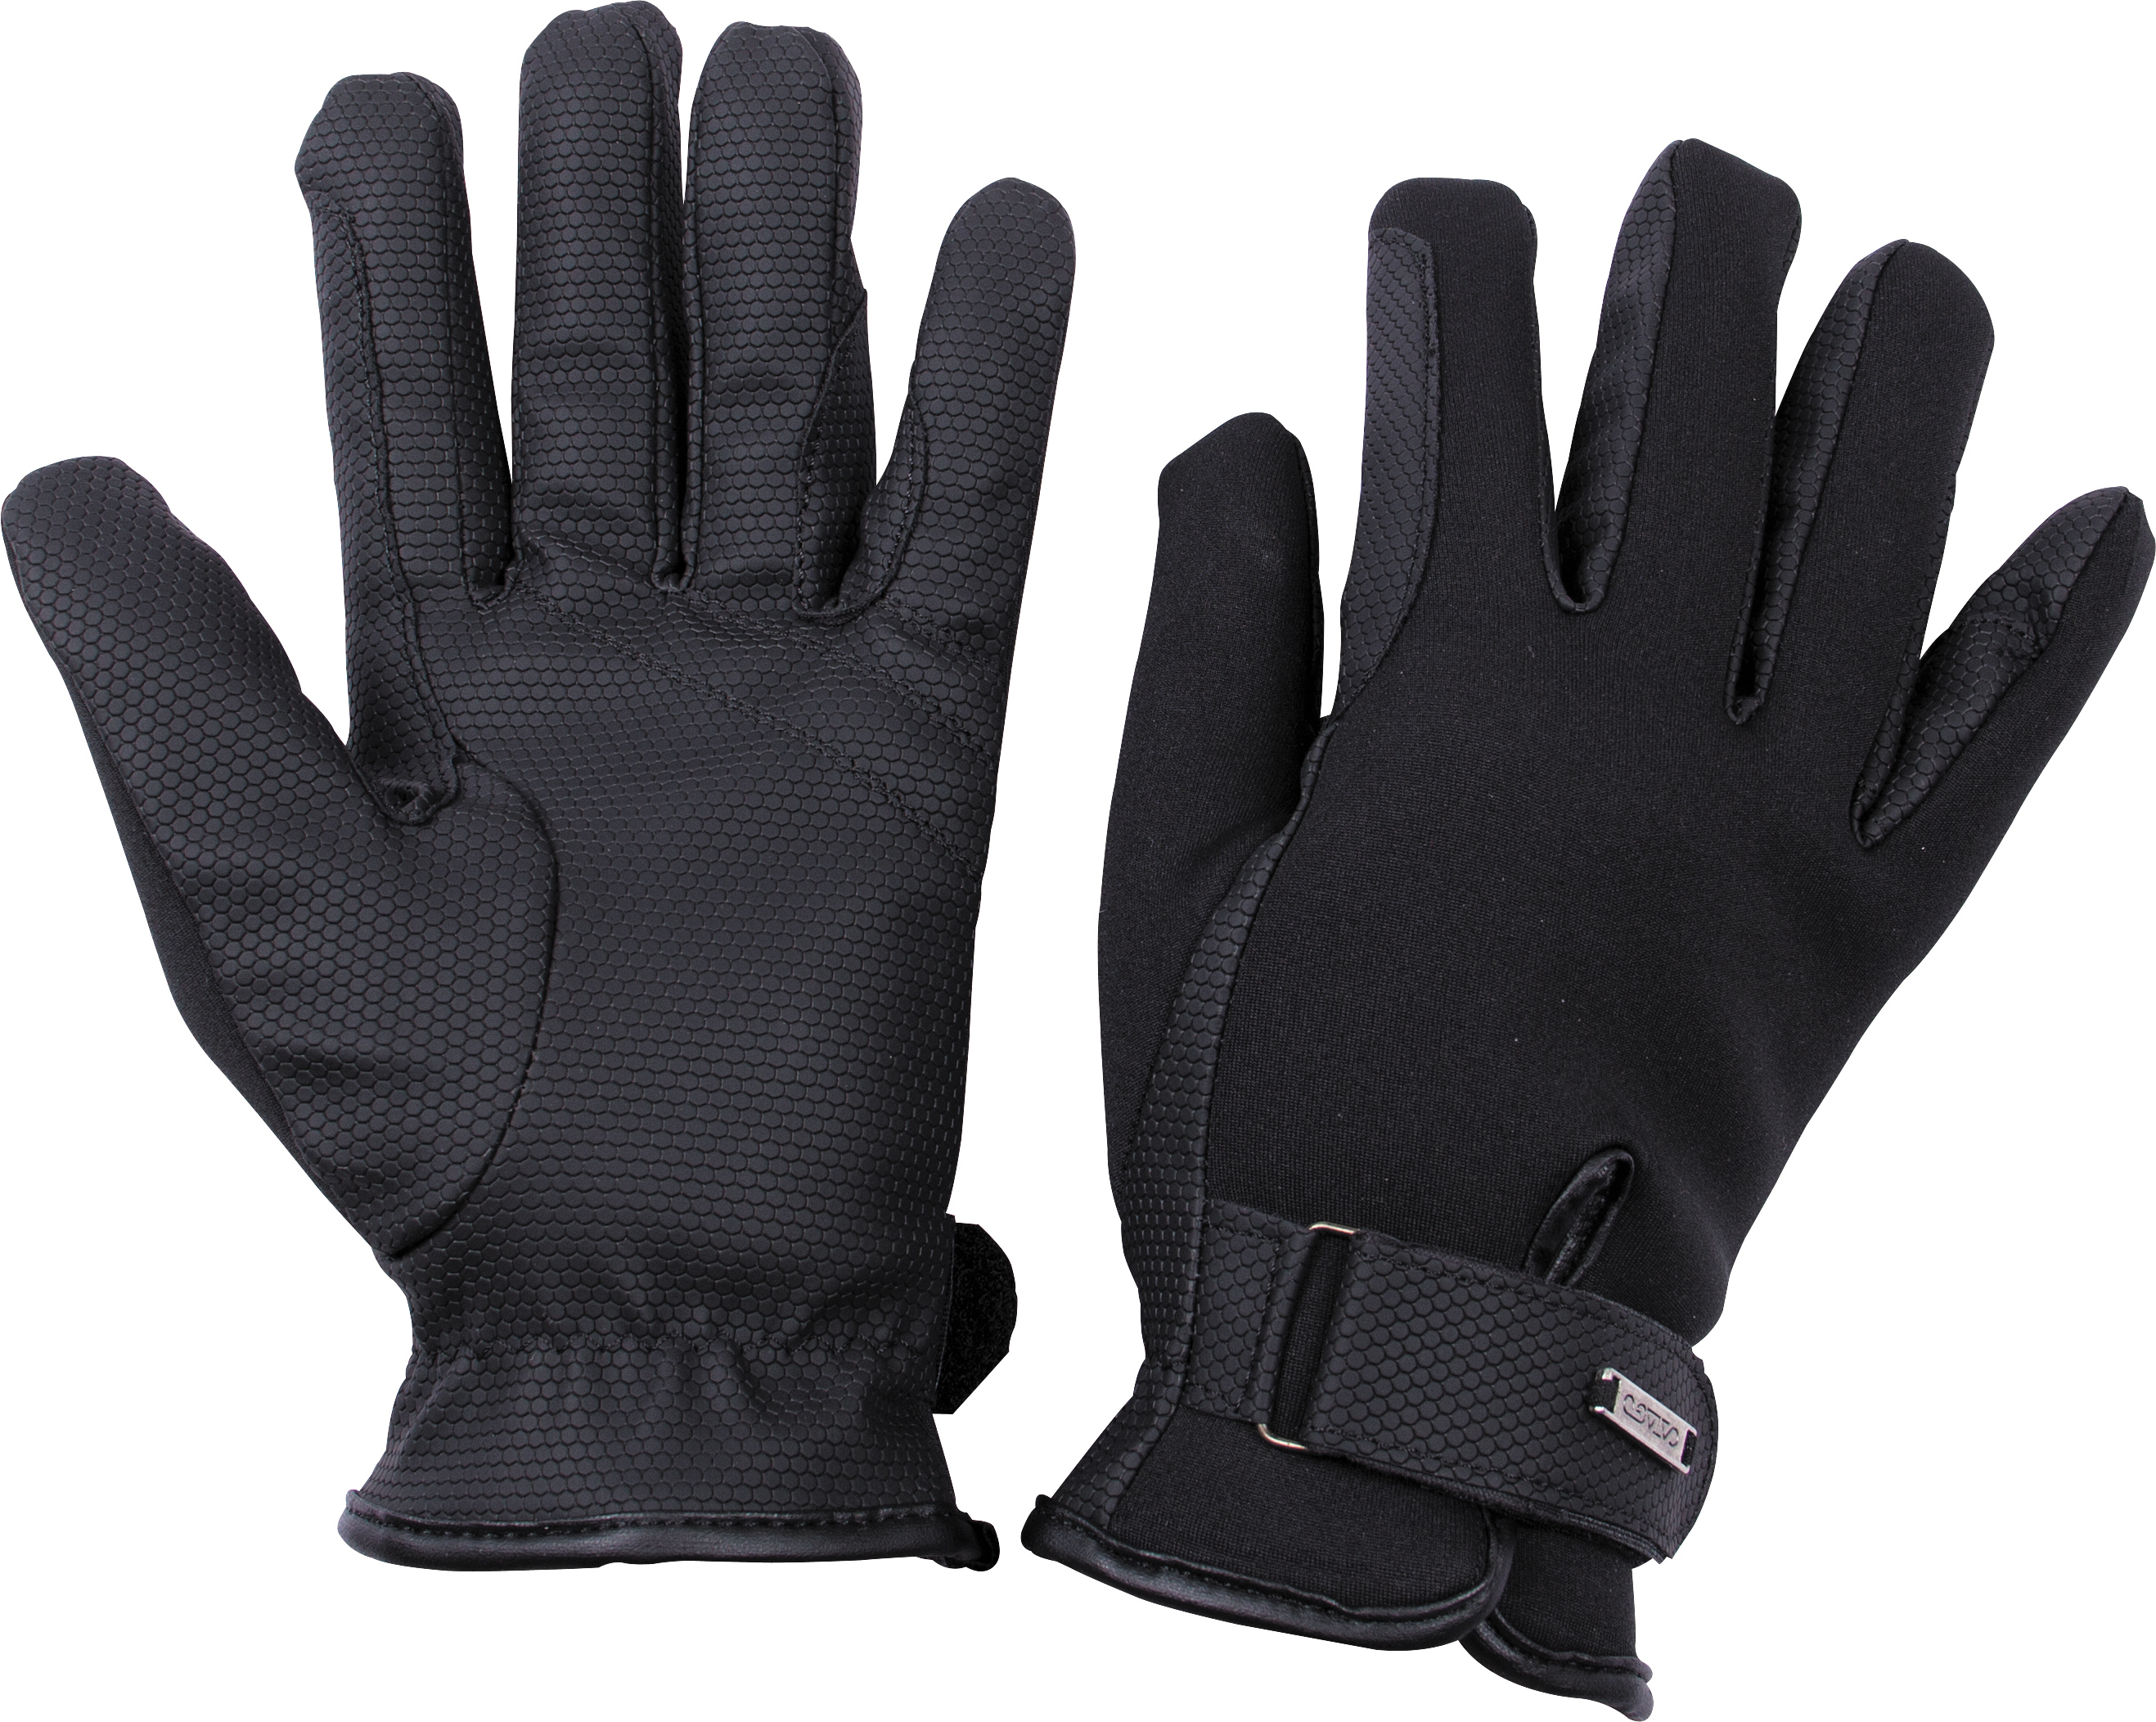 Equipage Pro Neoprene Glove - Black (S)